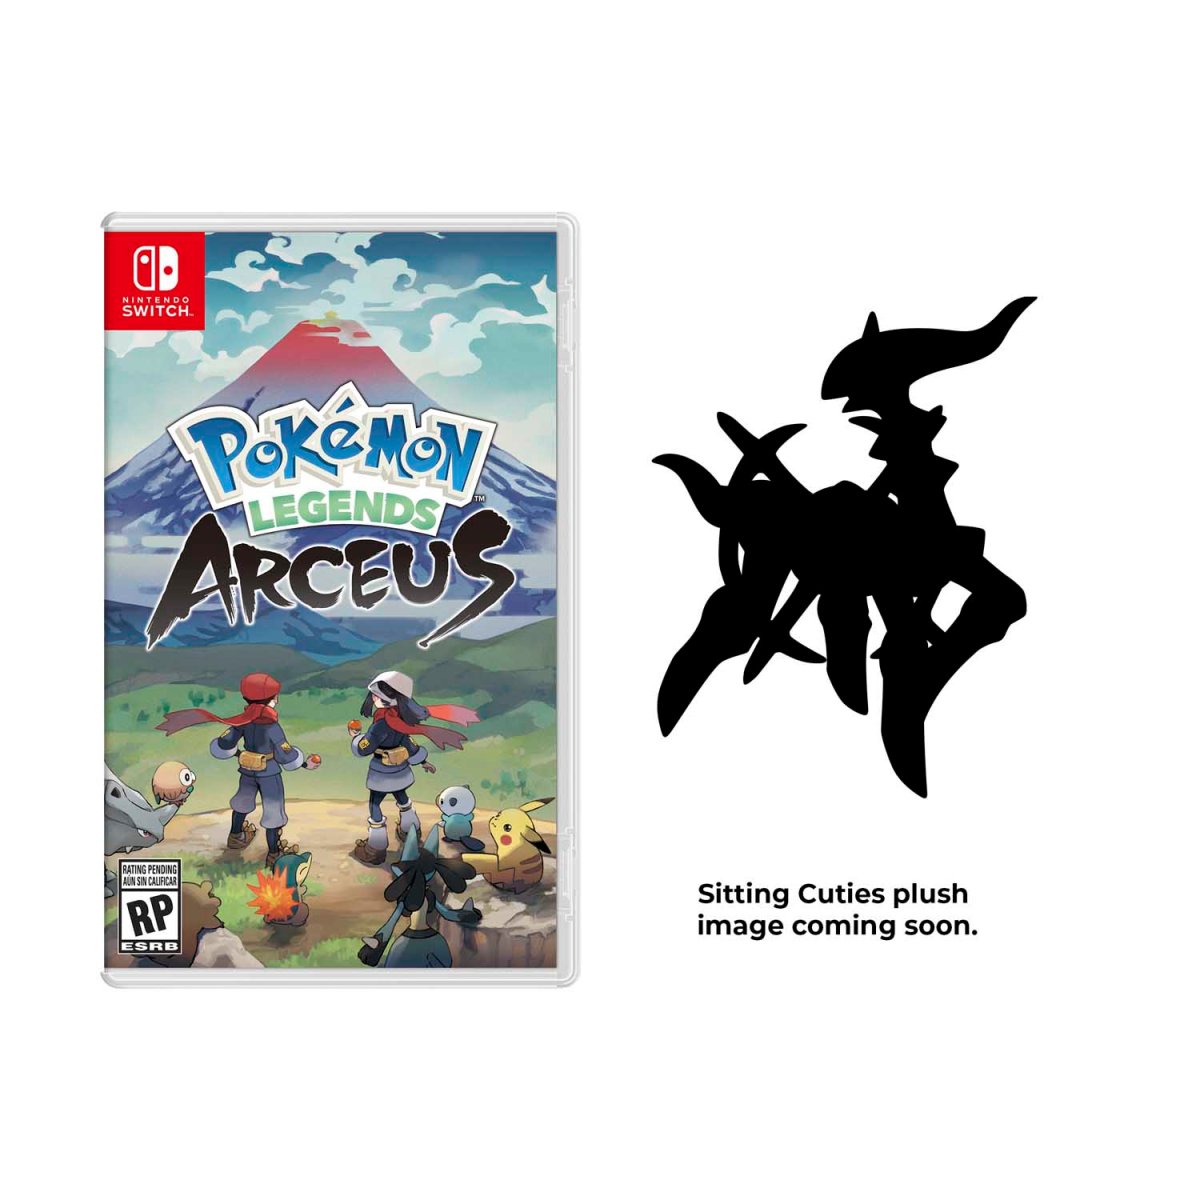 Pokémon Legends: Arceus preorders come with an Arceus Sitting Cuties ...